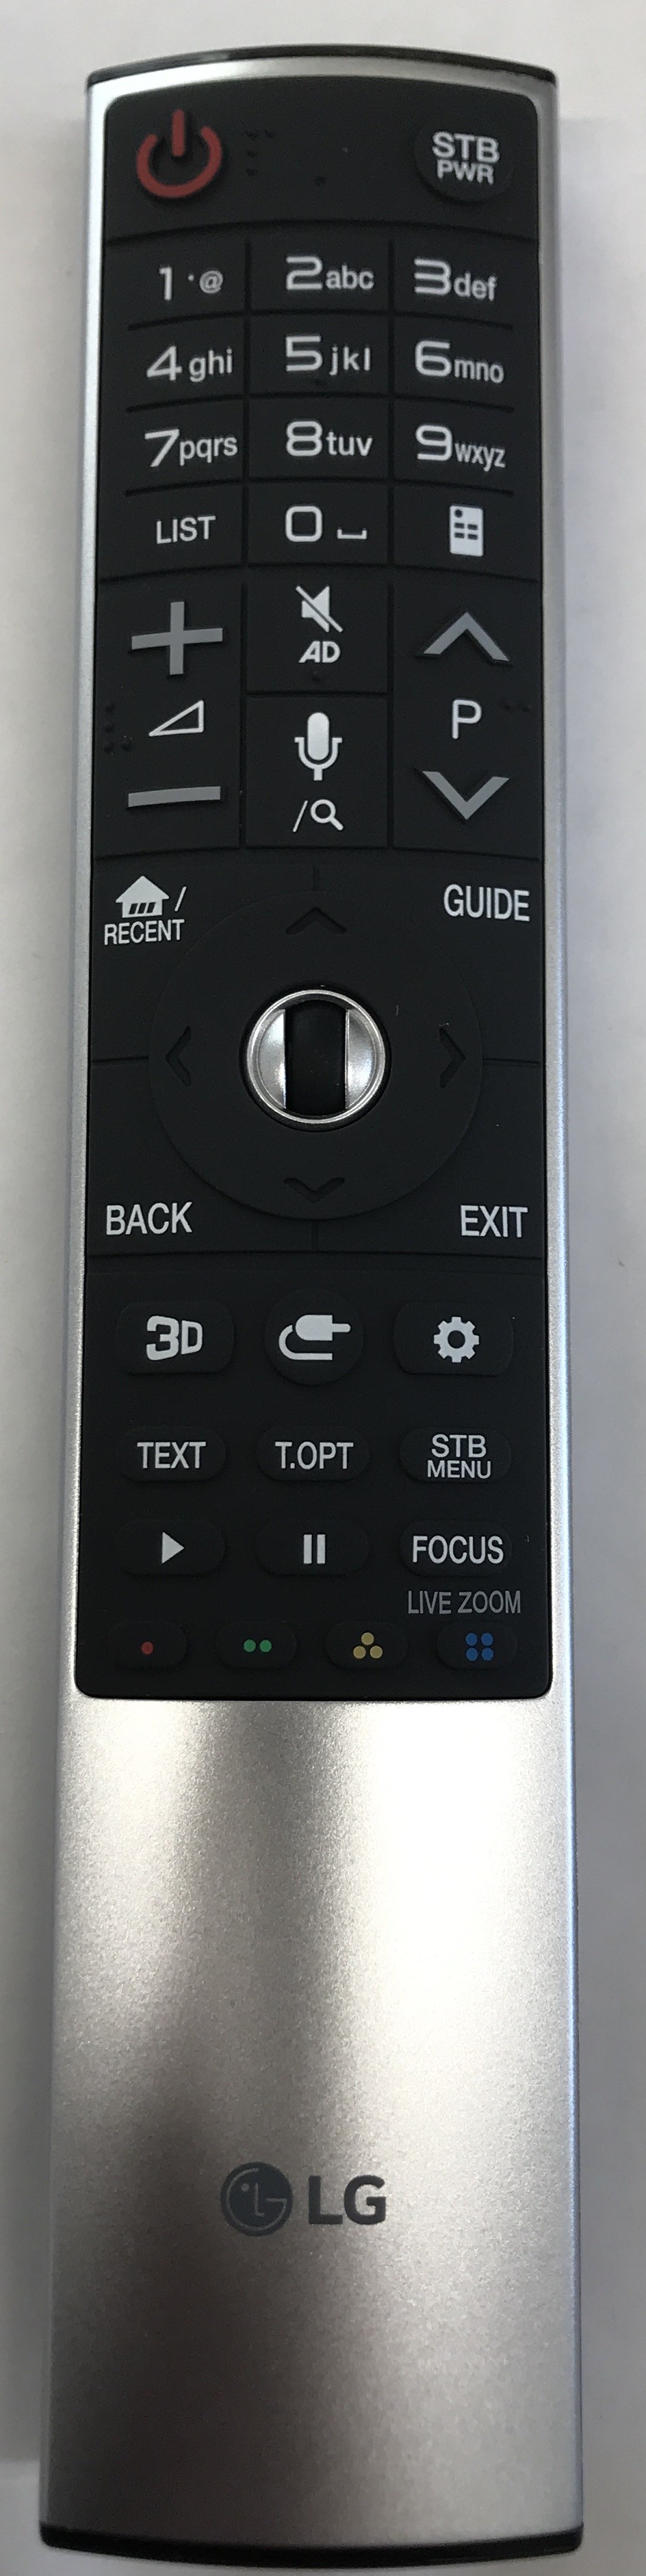 LG AN-MR600 Magic remote control Original